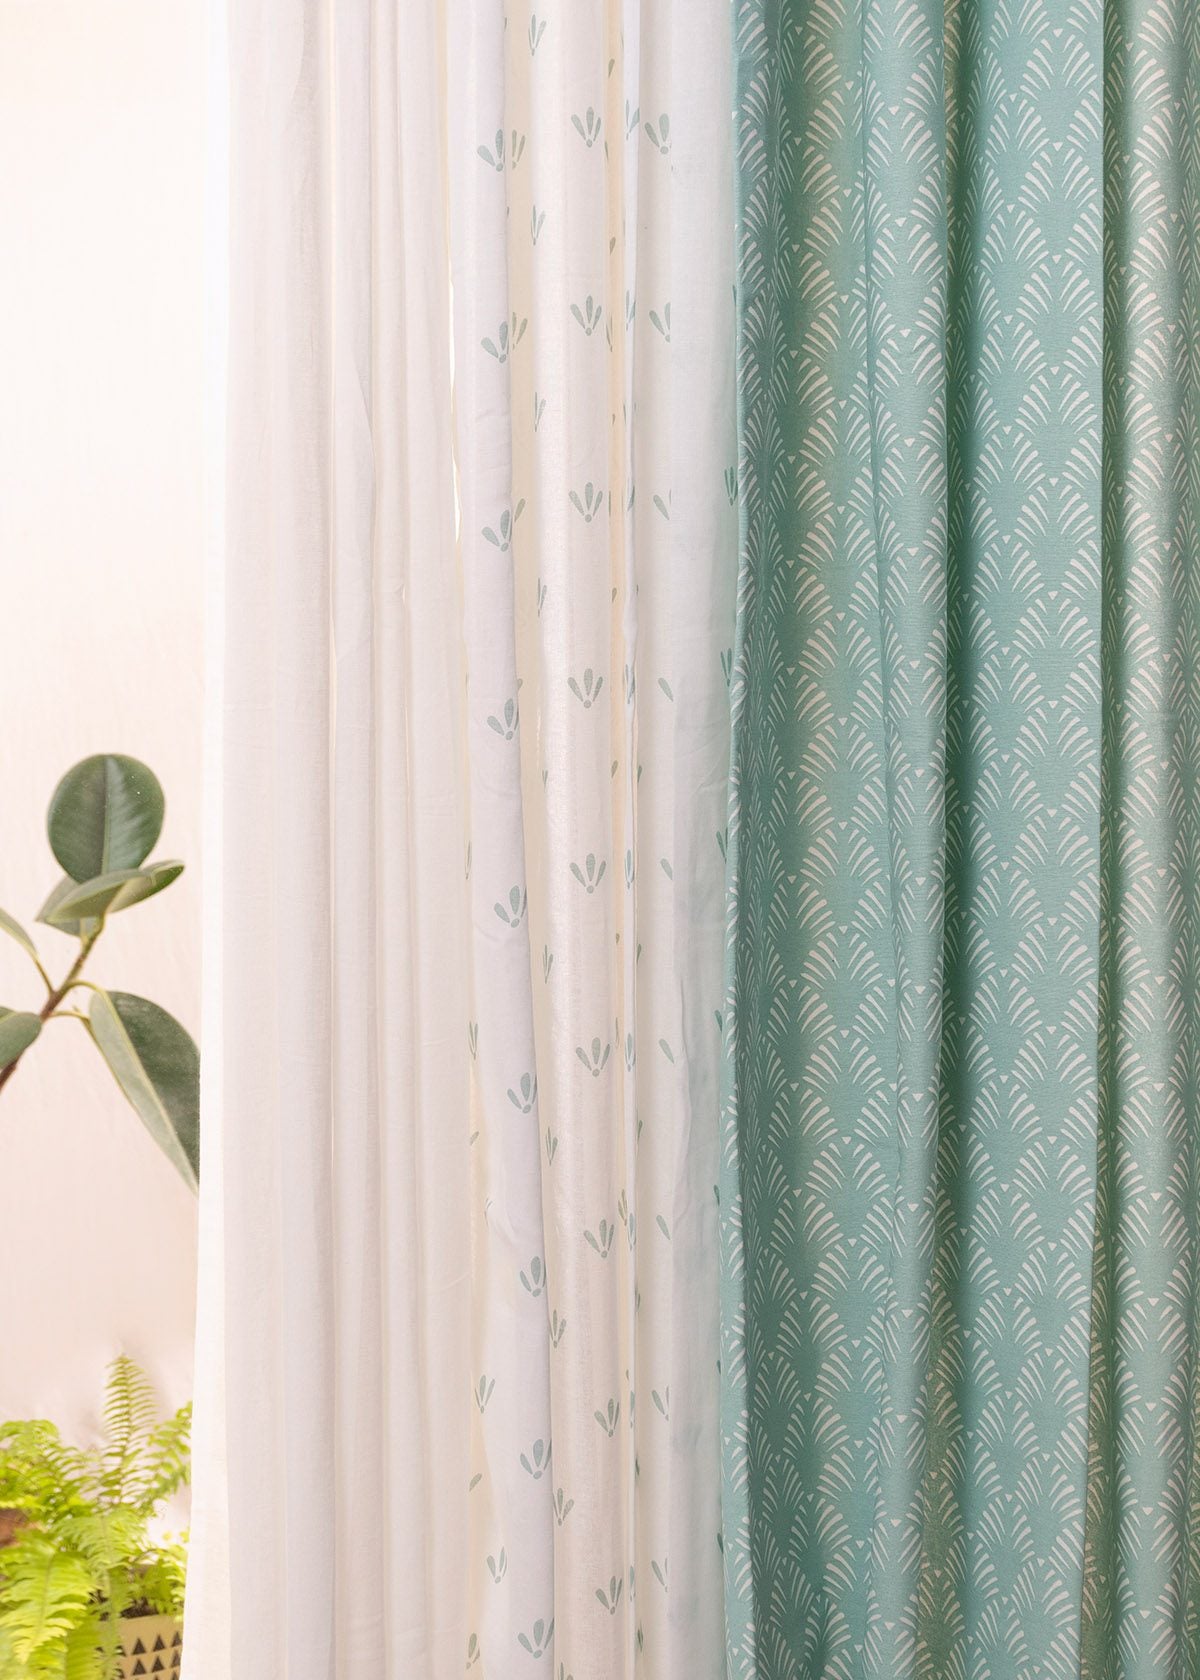 Pergola Nile Blue, Aniseed Nile Blue Sheer, Warm White Solid Sheer Set Of 6 Combo Cotton Curtain - Nile Blue And White